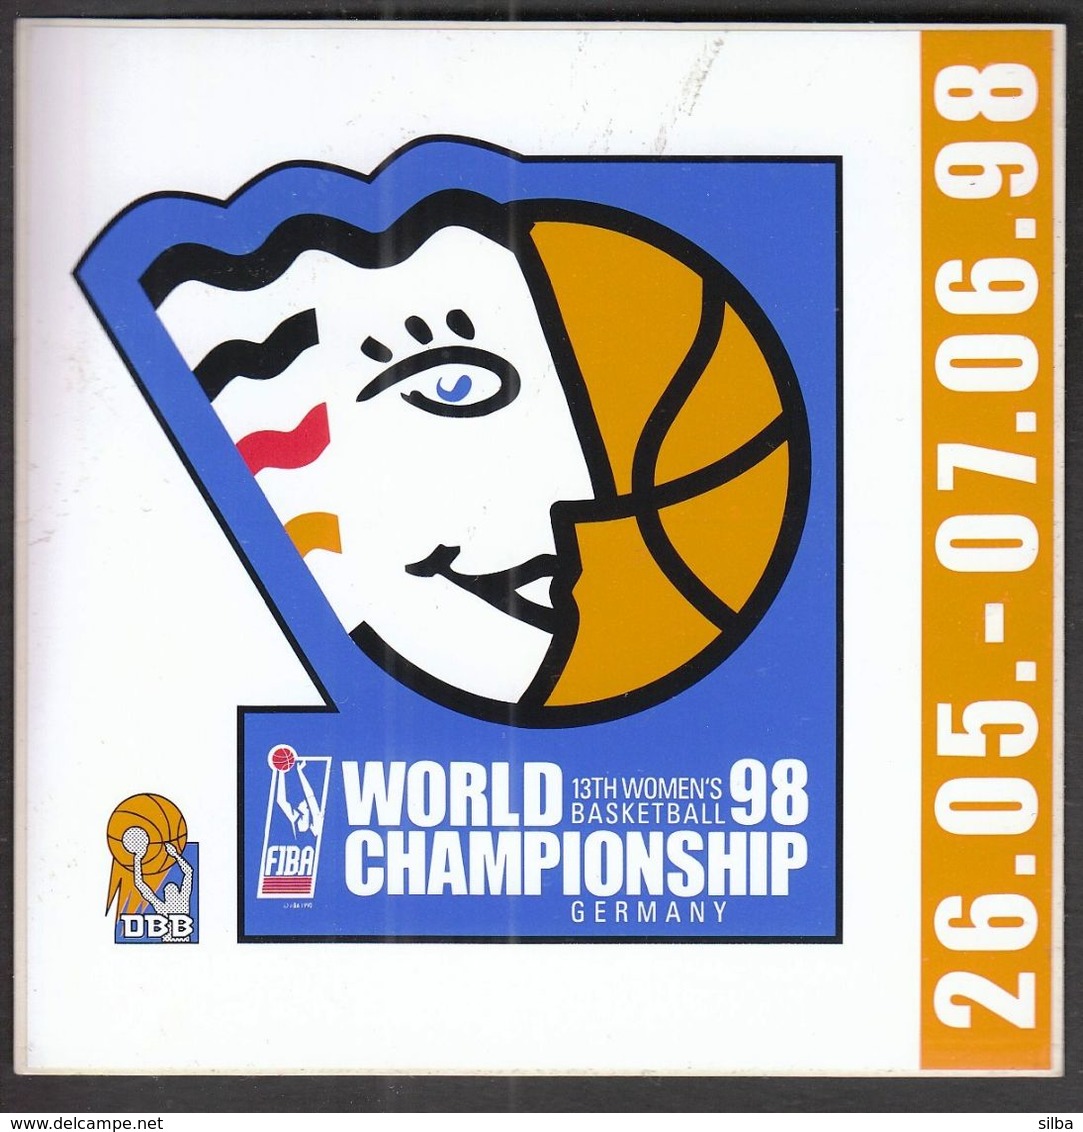 Germany 1998 / FIBA 13th Women's World Basketball Championship / Sticker - Uniformes, Recordatorios & Misc